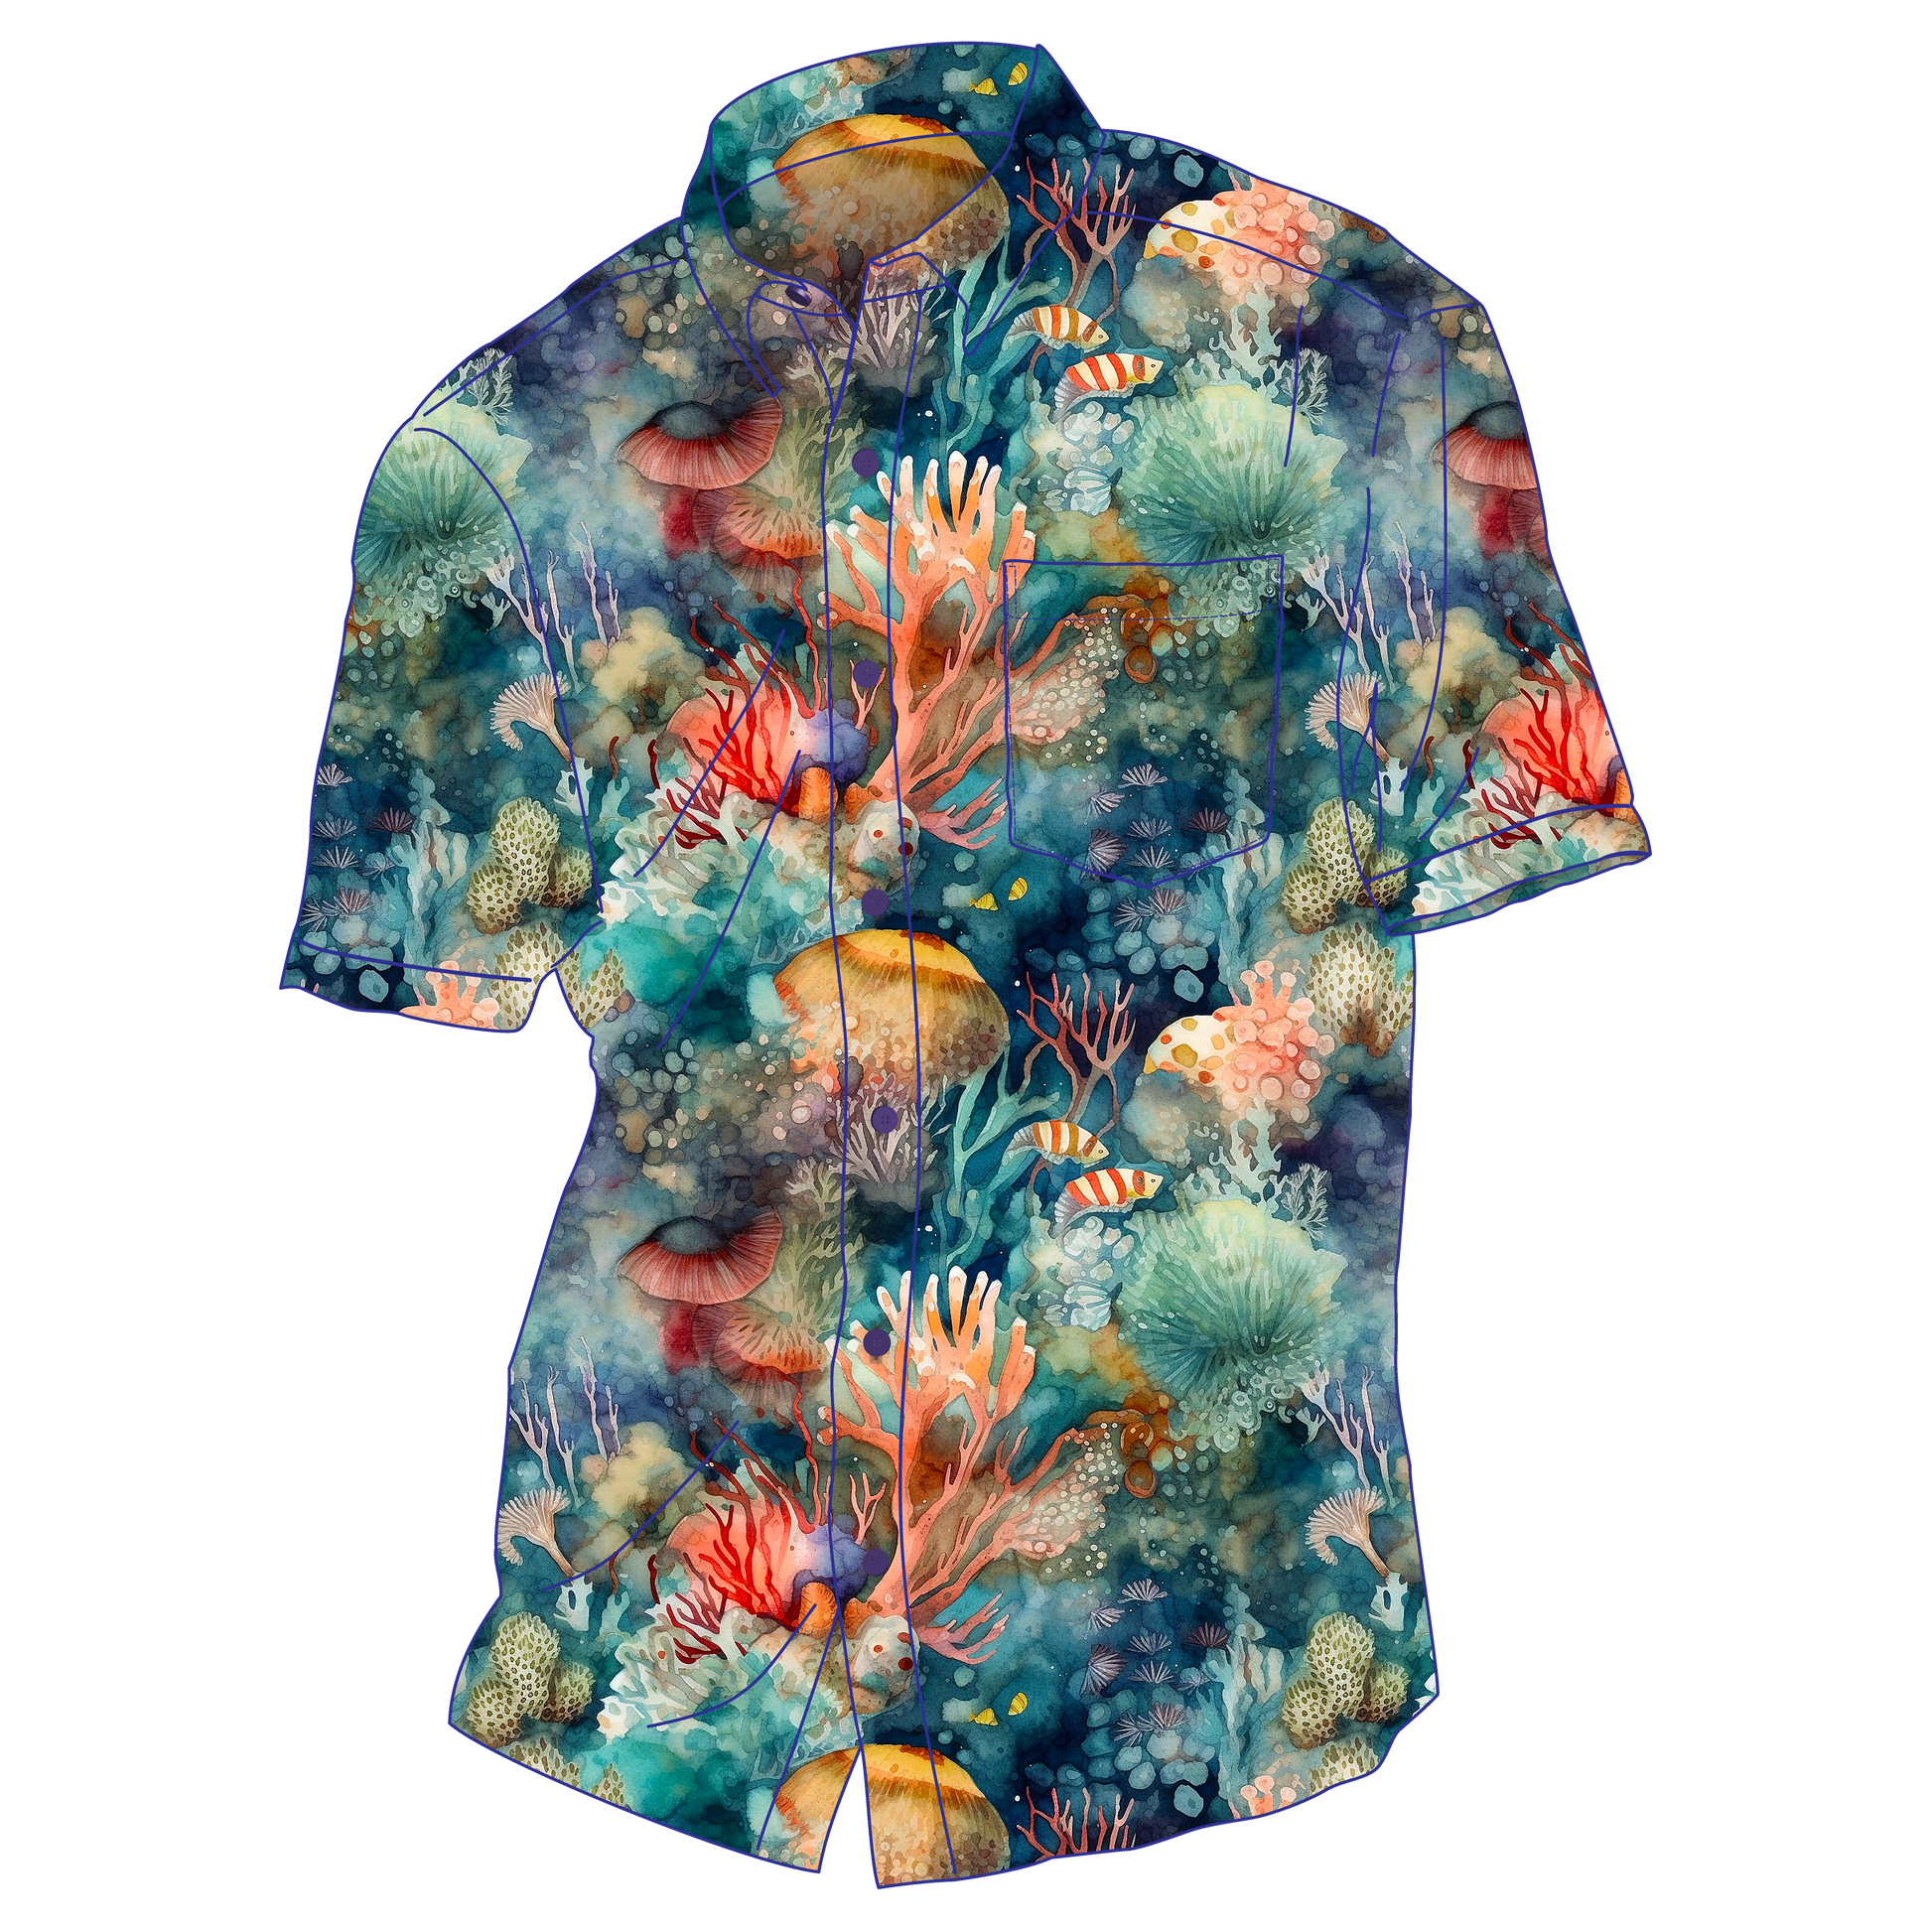 Watercolor Coral Reef (Dark) Printed Fabric by Studio Ten Design